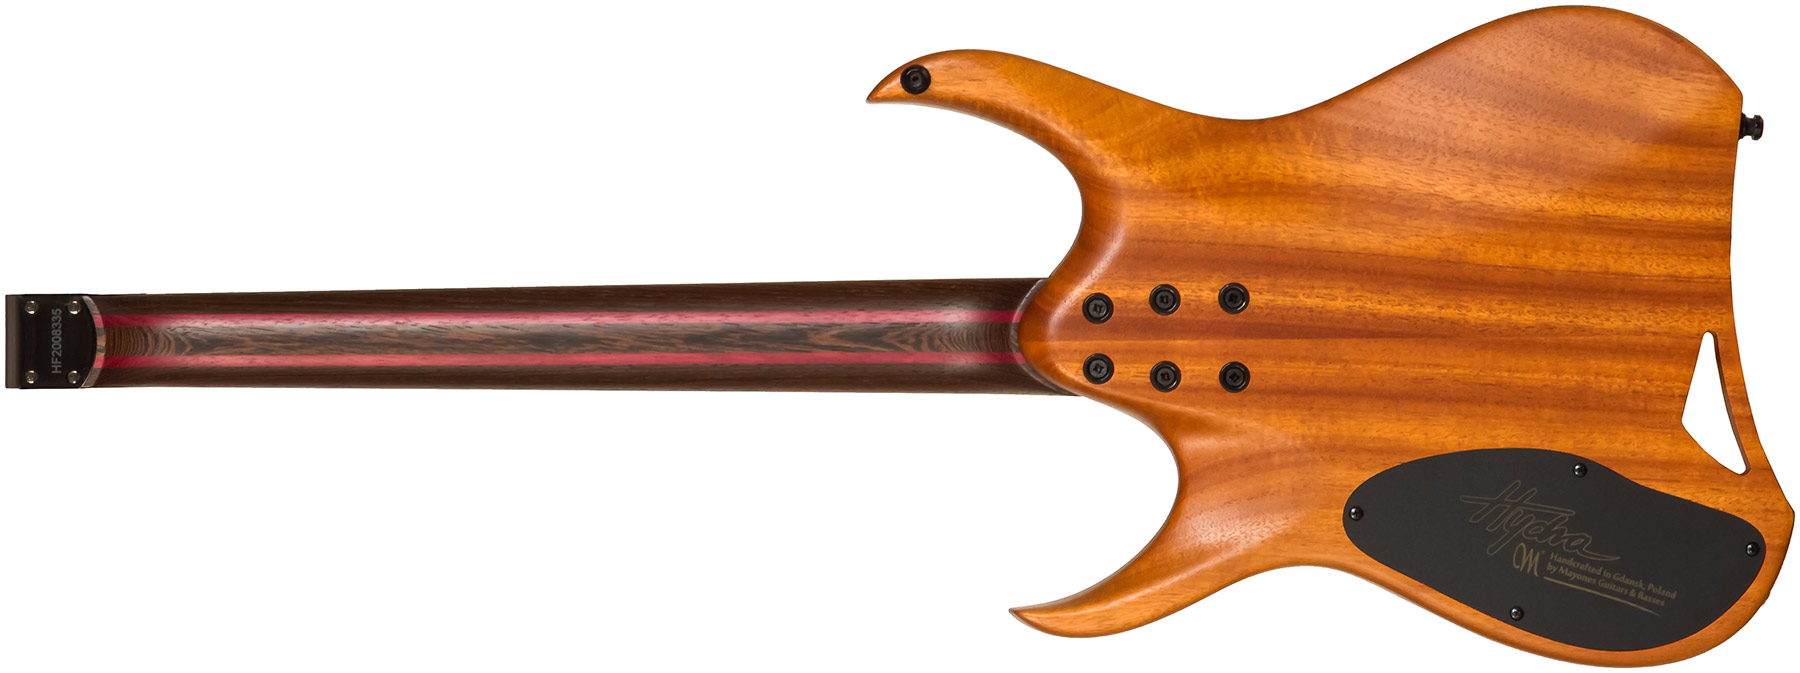 Mayones Guitars Hydra Elite 6 2h Seymour Duncan Ht Eb #hf2008335 - Dirty Red Satin - Metal electric guitar - Variation 1